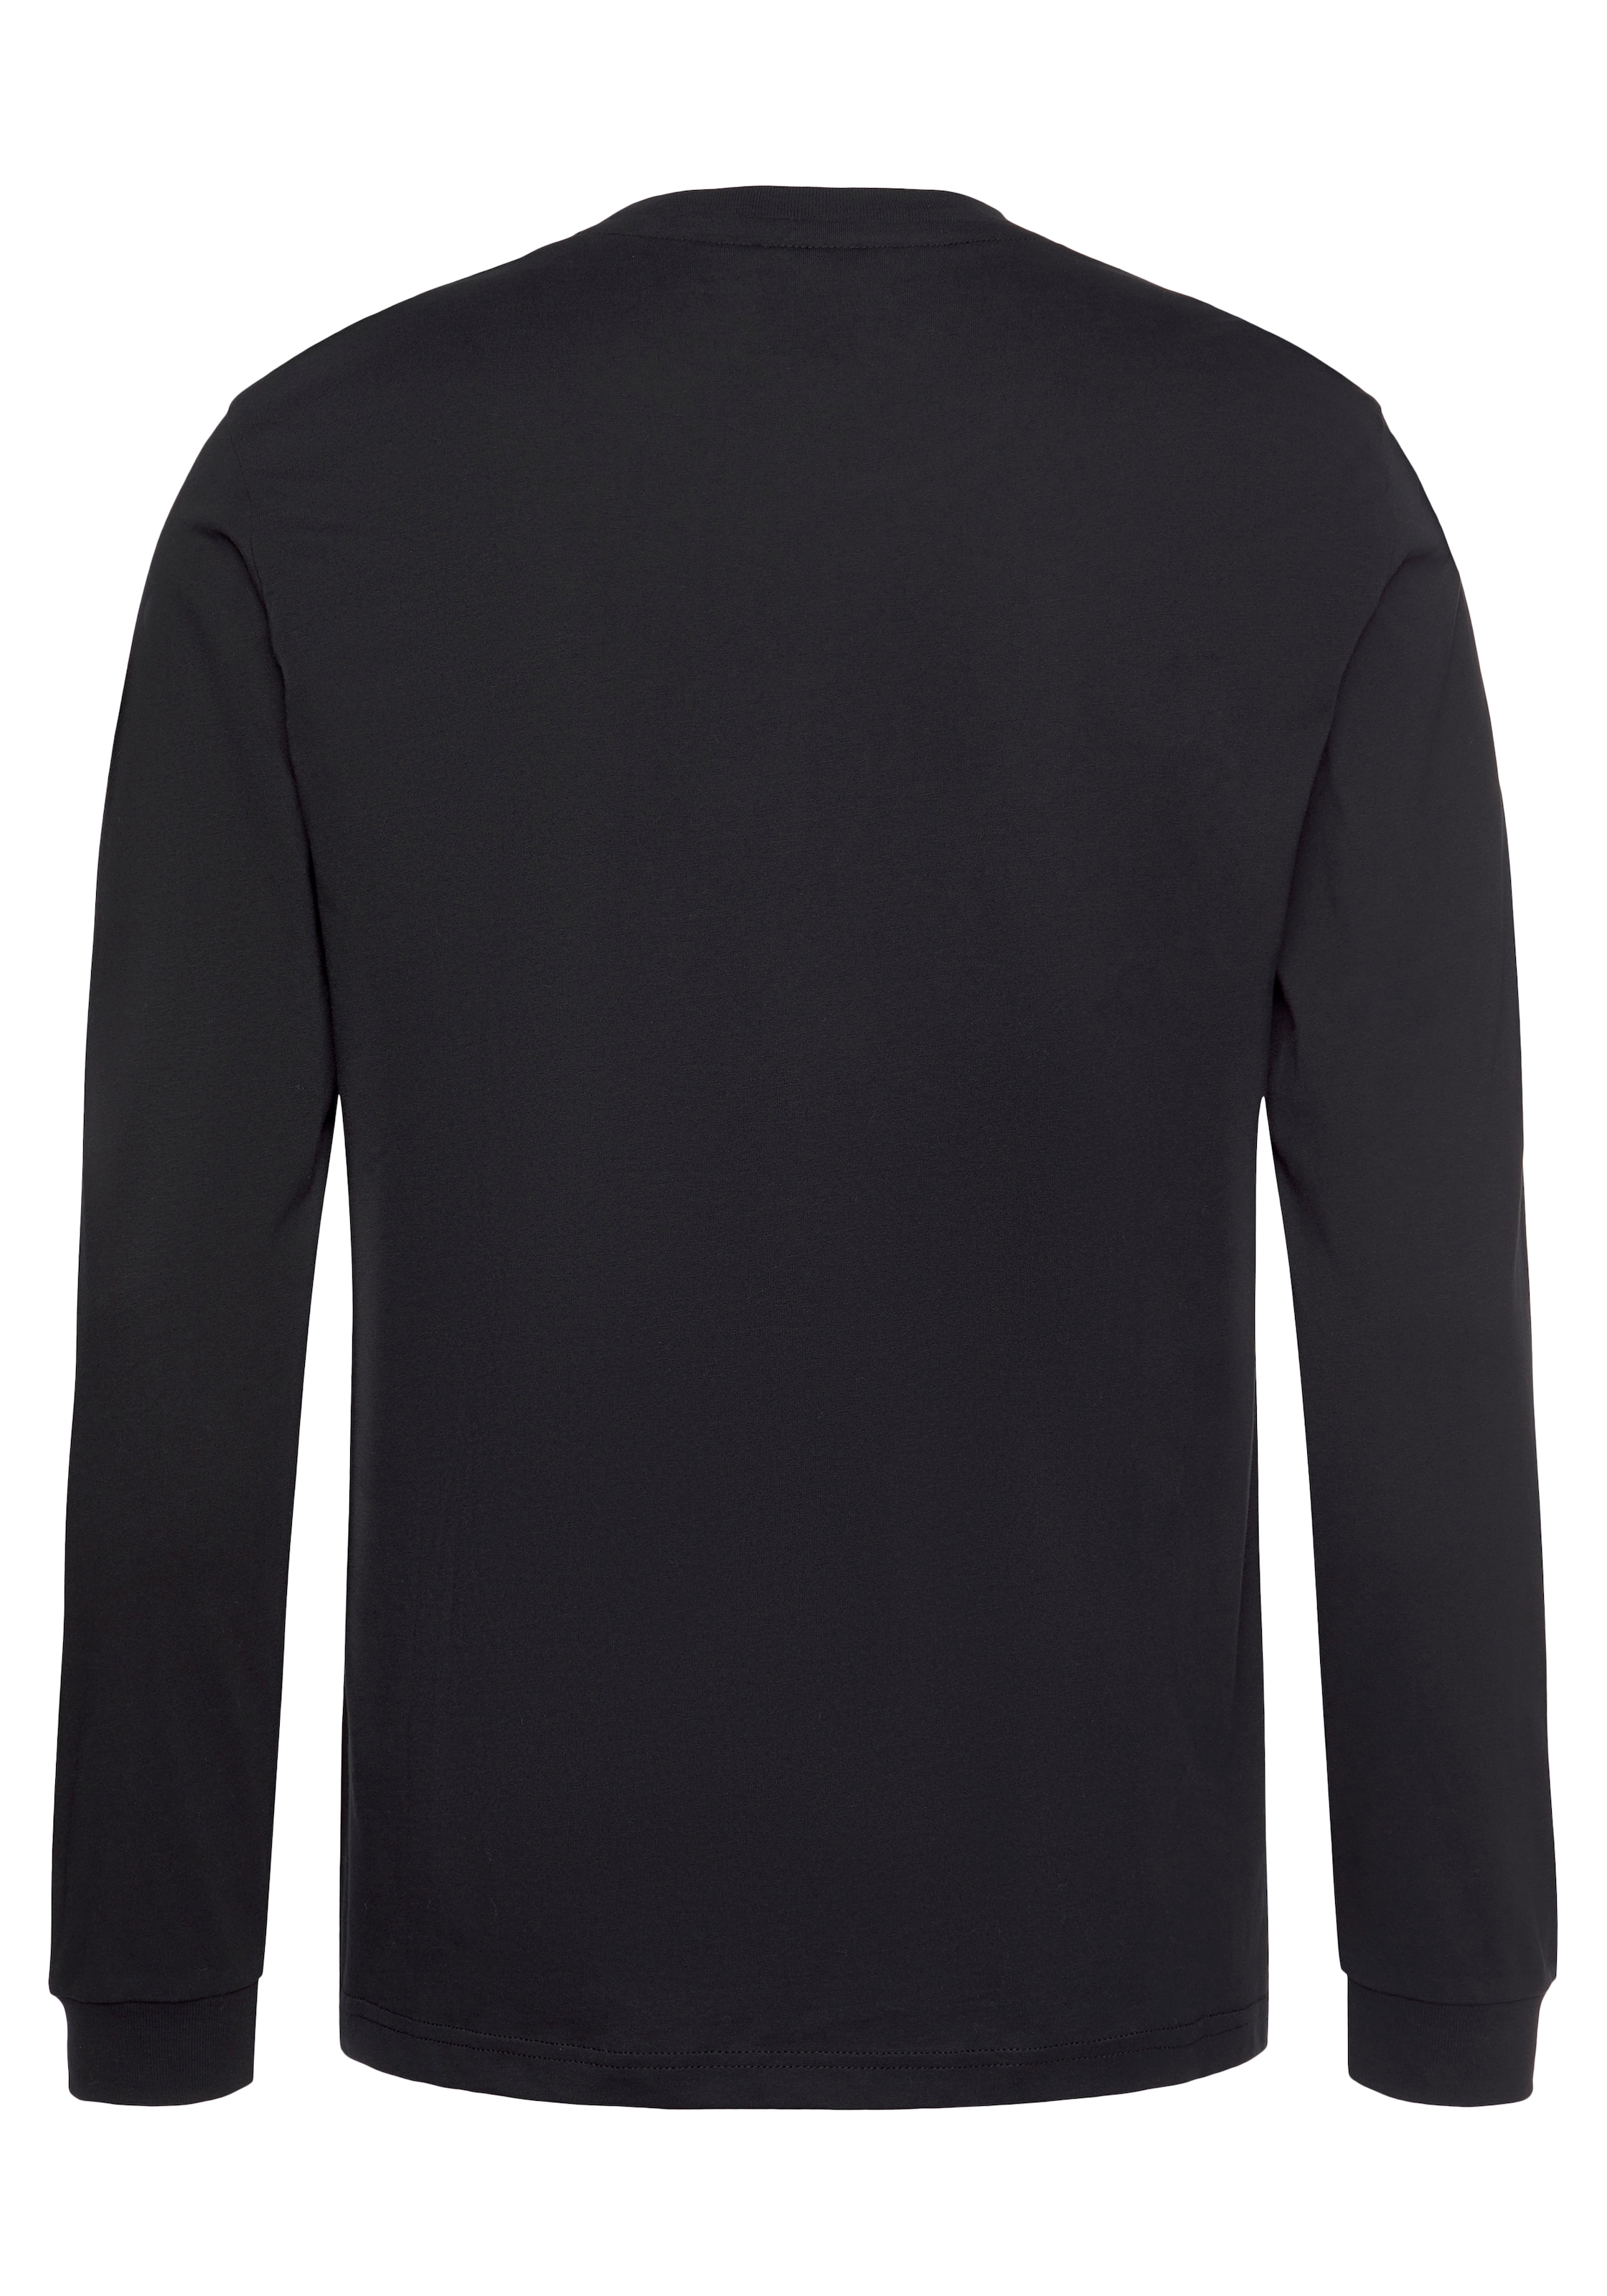 »Long kaufen Langarmshirt T-Shirt« bei Champion OTTO Sleeve online